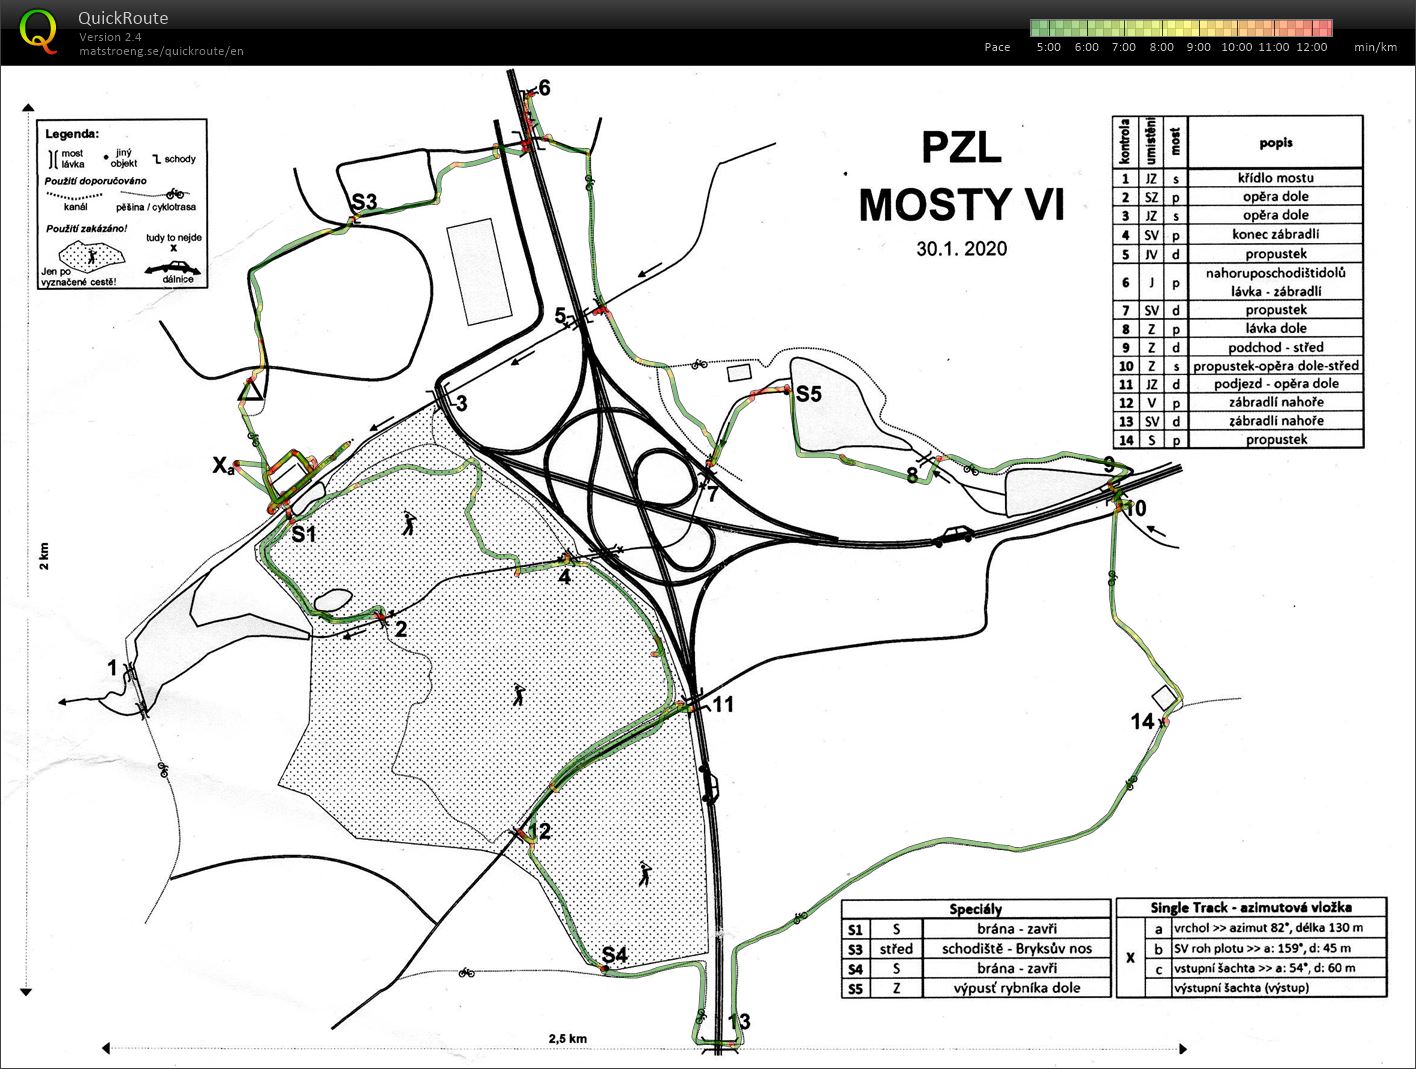 PZL - Mosty VI (30-01-2020)